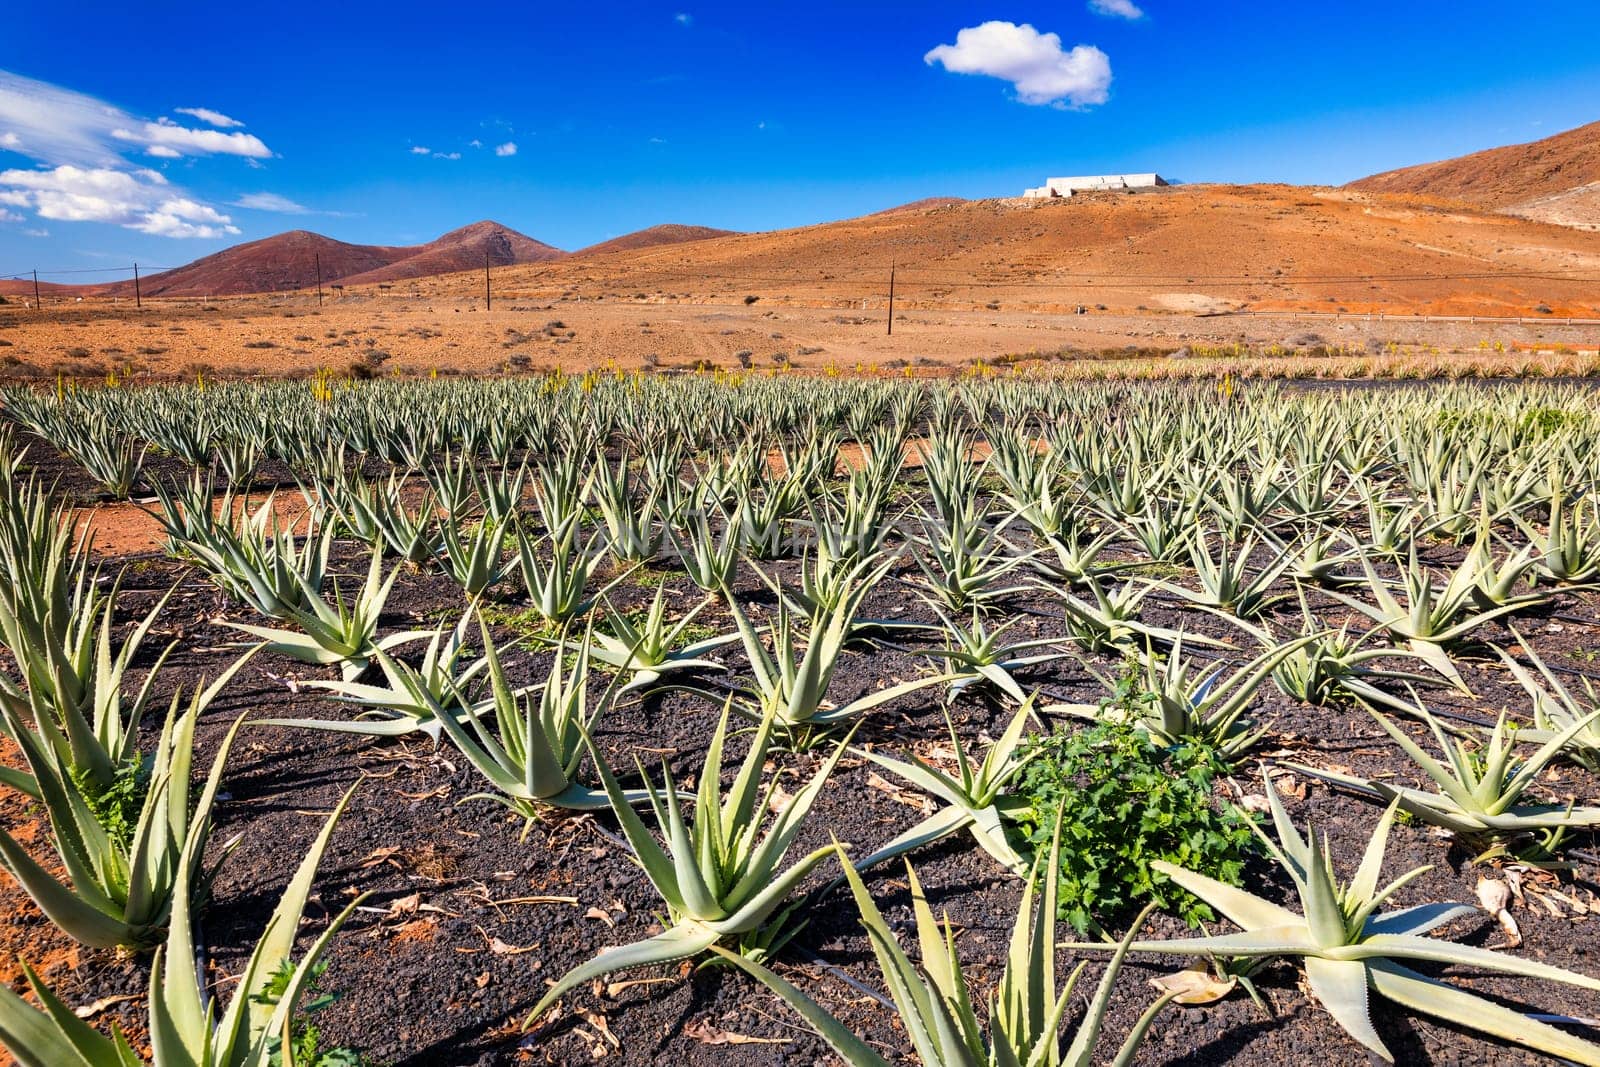 Aloe vera plant. Aloe vera plantation. Fuerteventura, Canary Islands, Spain. Aloe Vera growing on the Island of Fuerteventura in the Canary Islands, Spain. Aloe vera plantation in the Canary Islands.